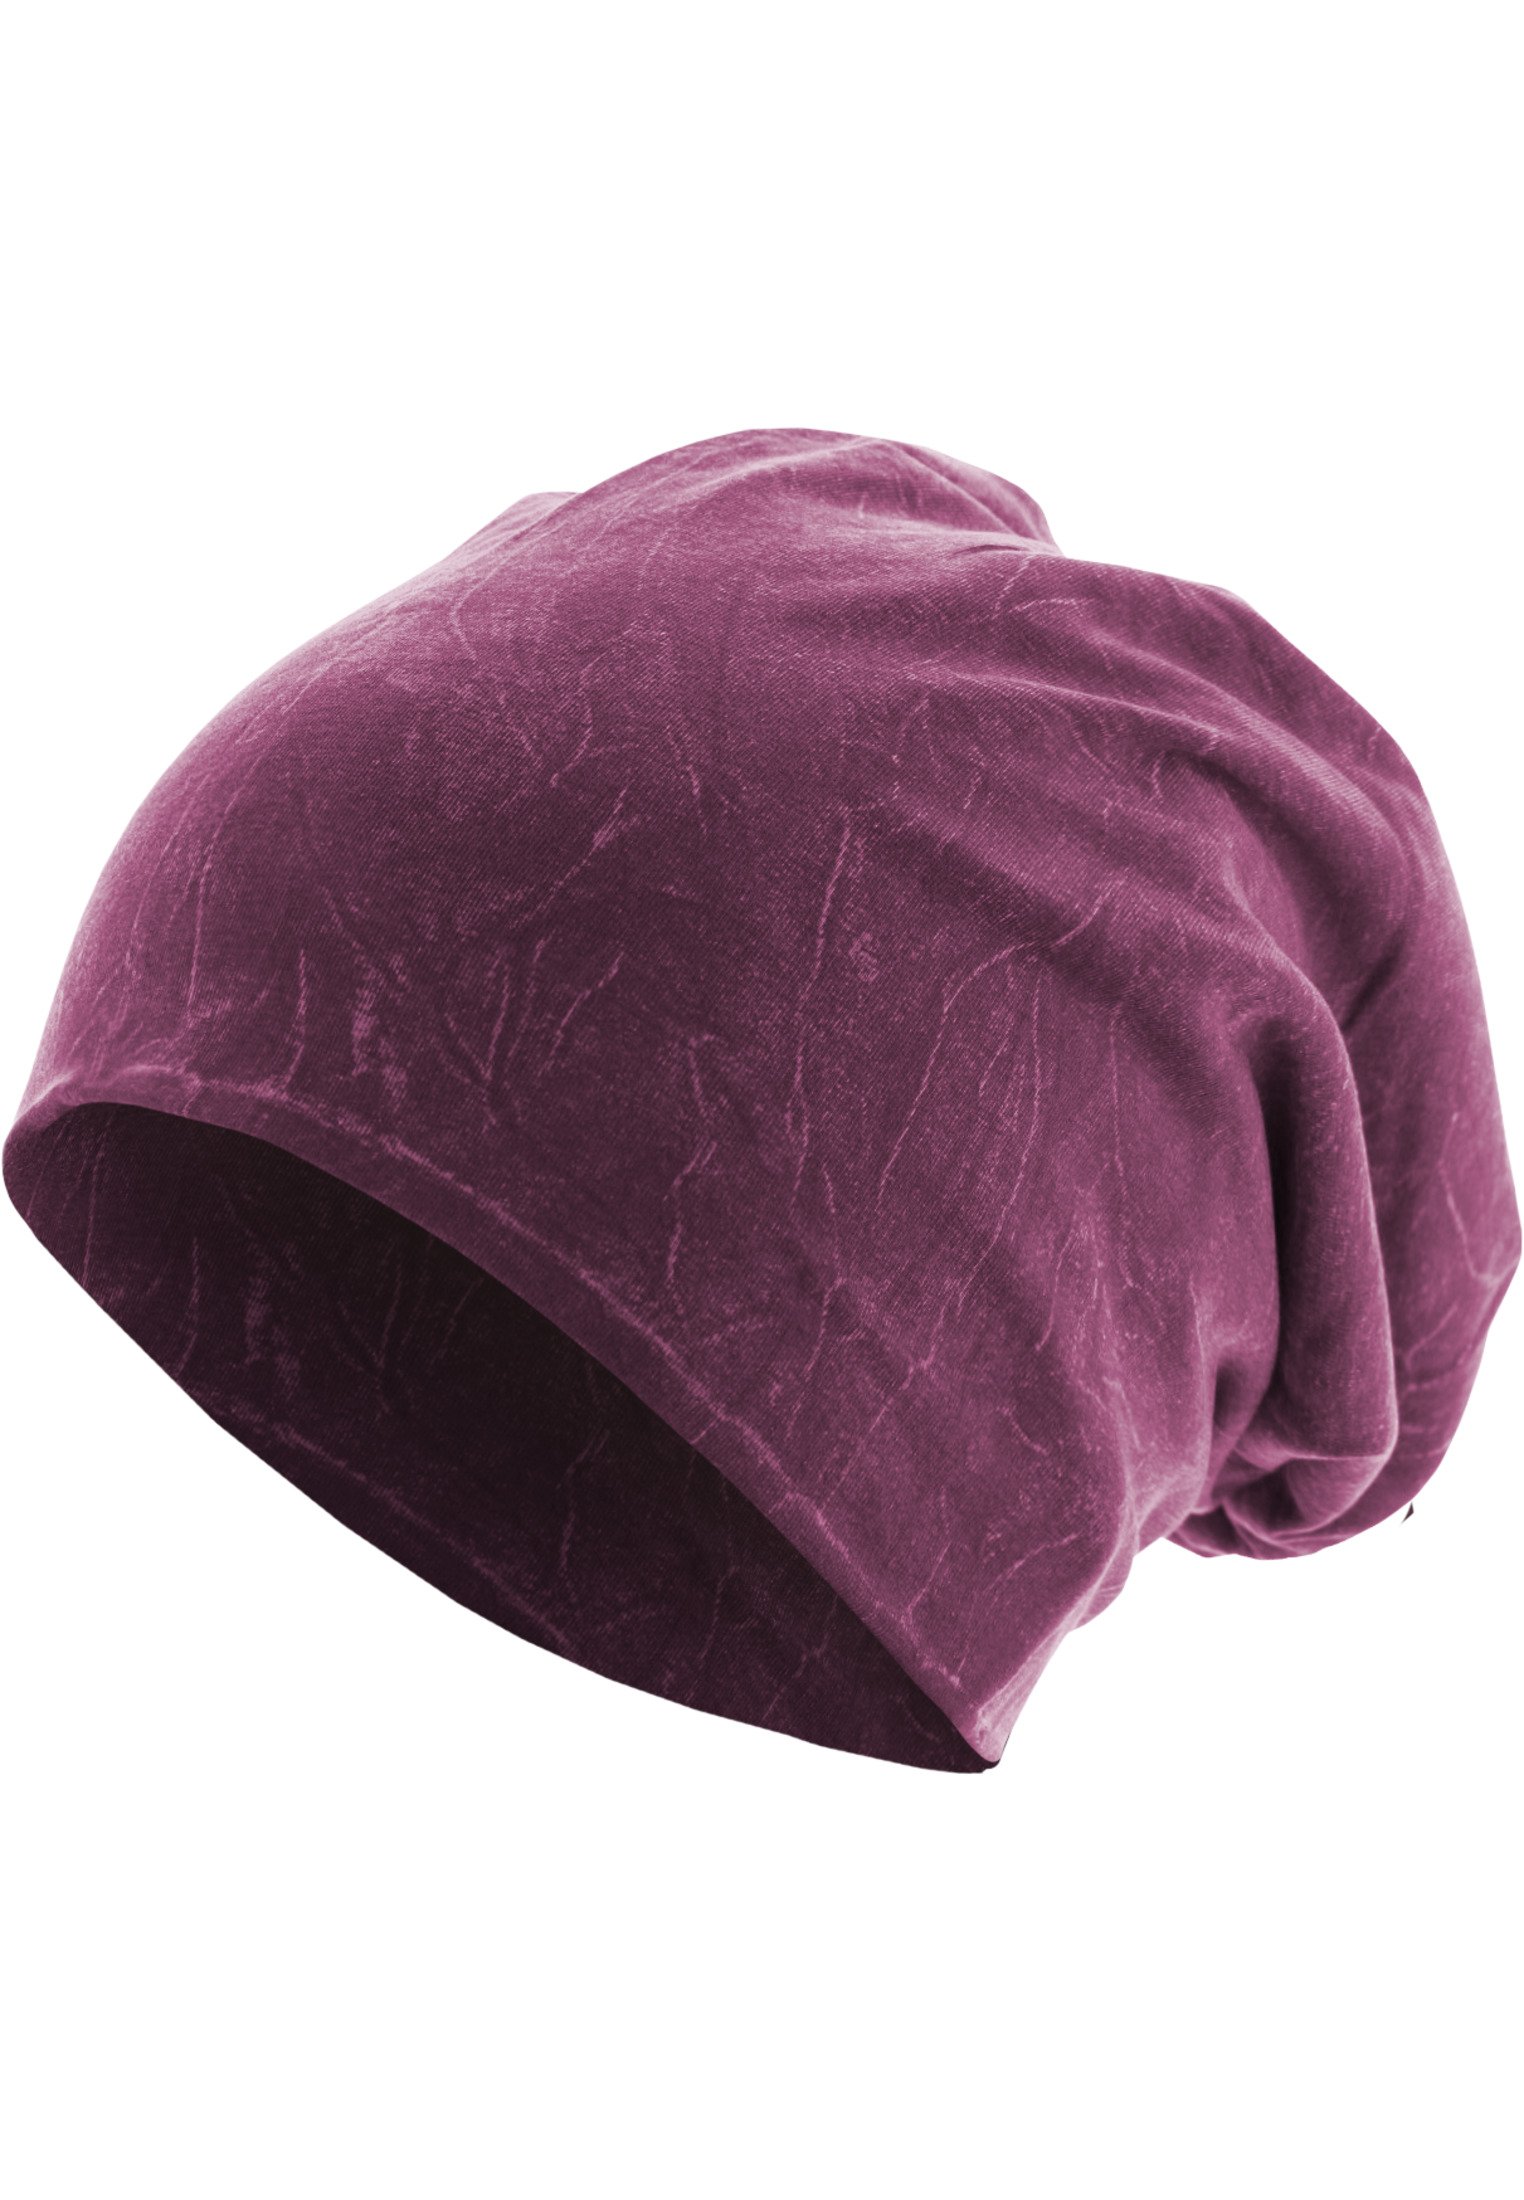 Stonewashed Jersey Beanie purple one size